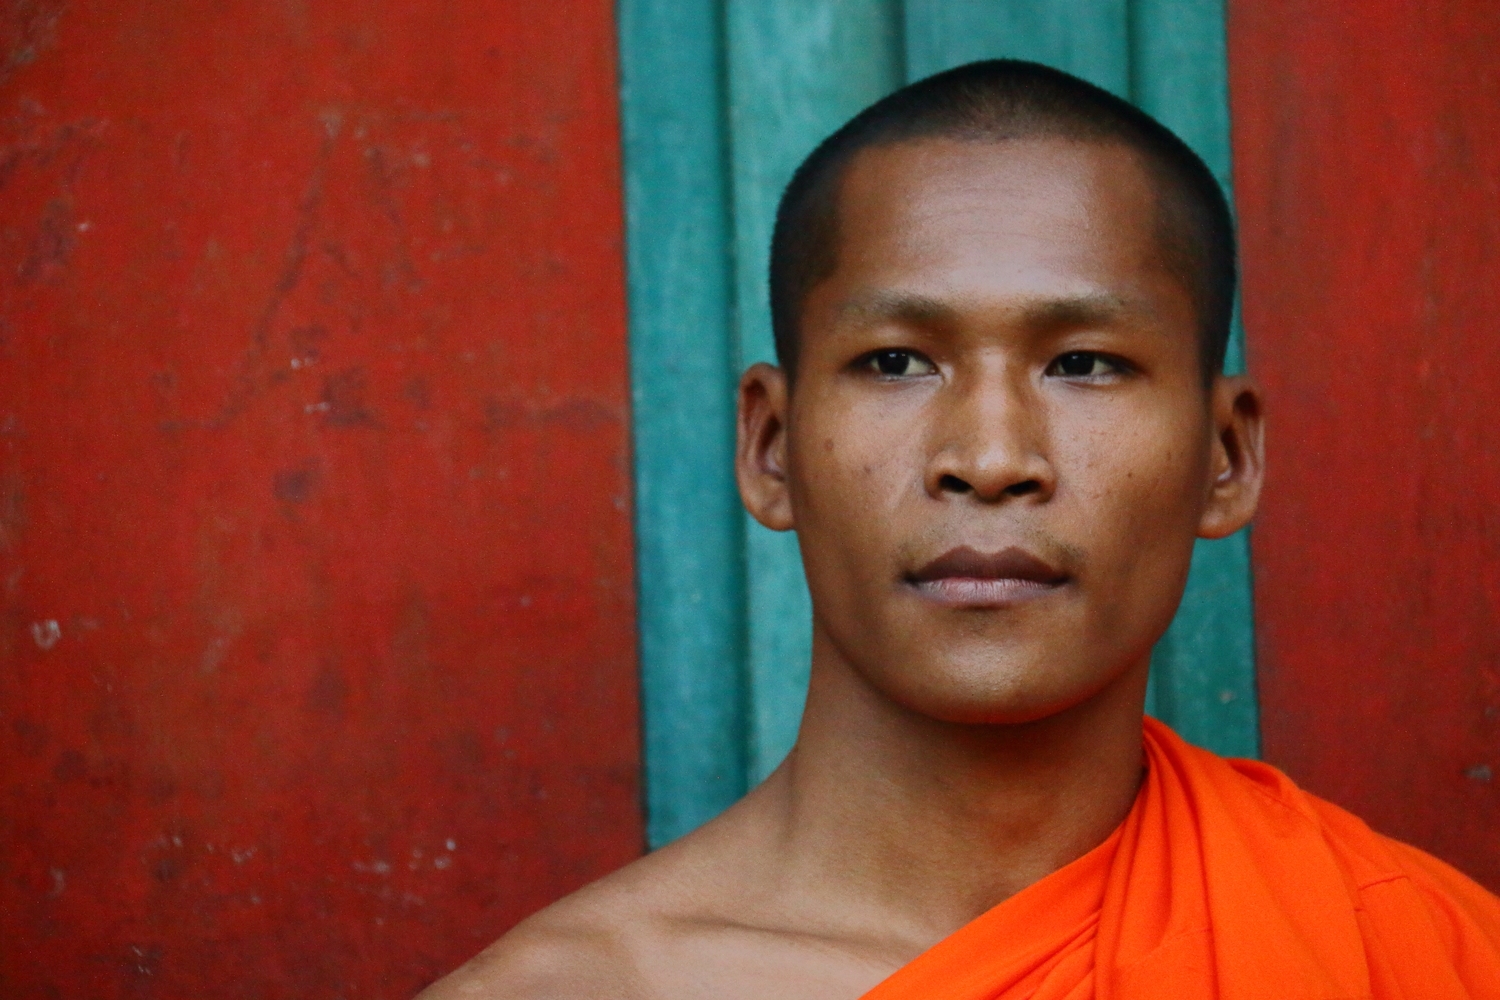 01. The Buddhist Monk